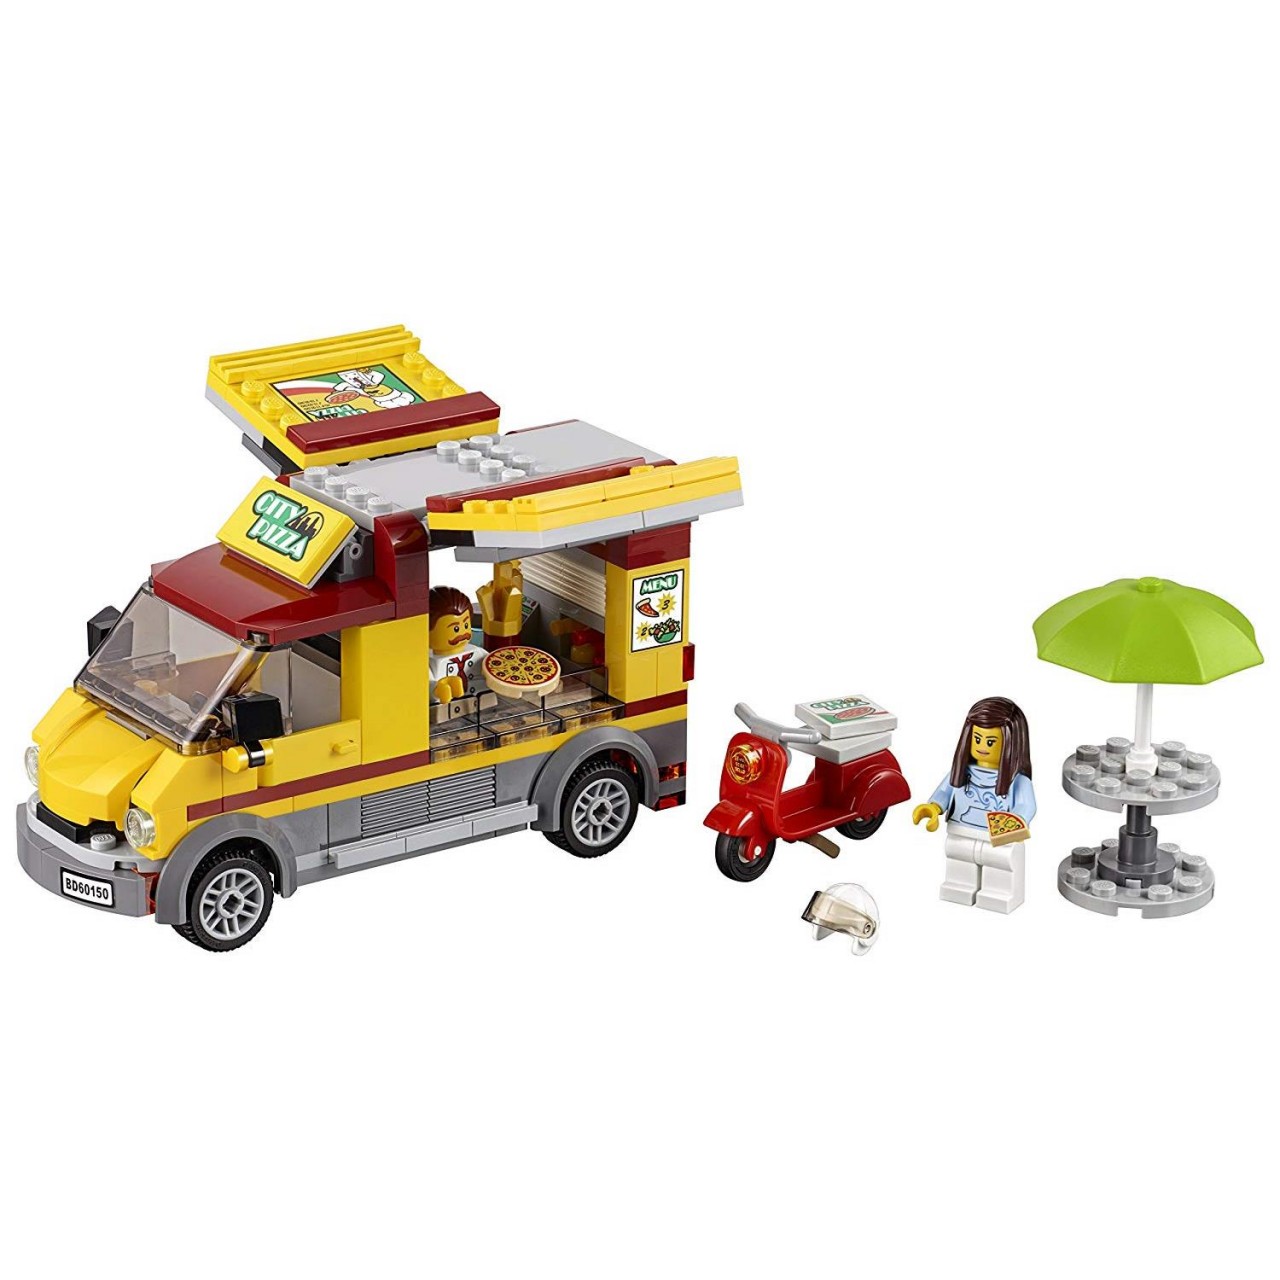 LEGO CITY 60150 Pizzawagen